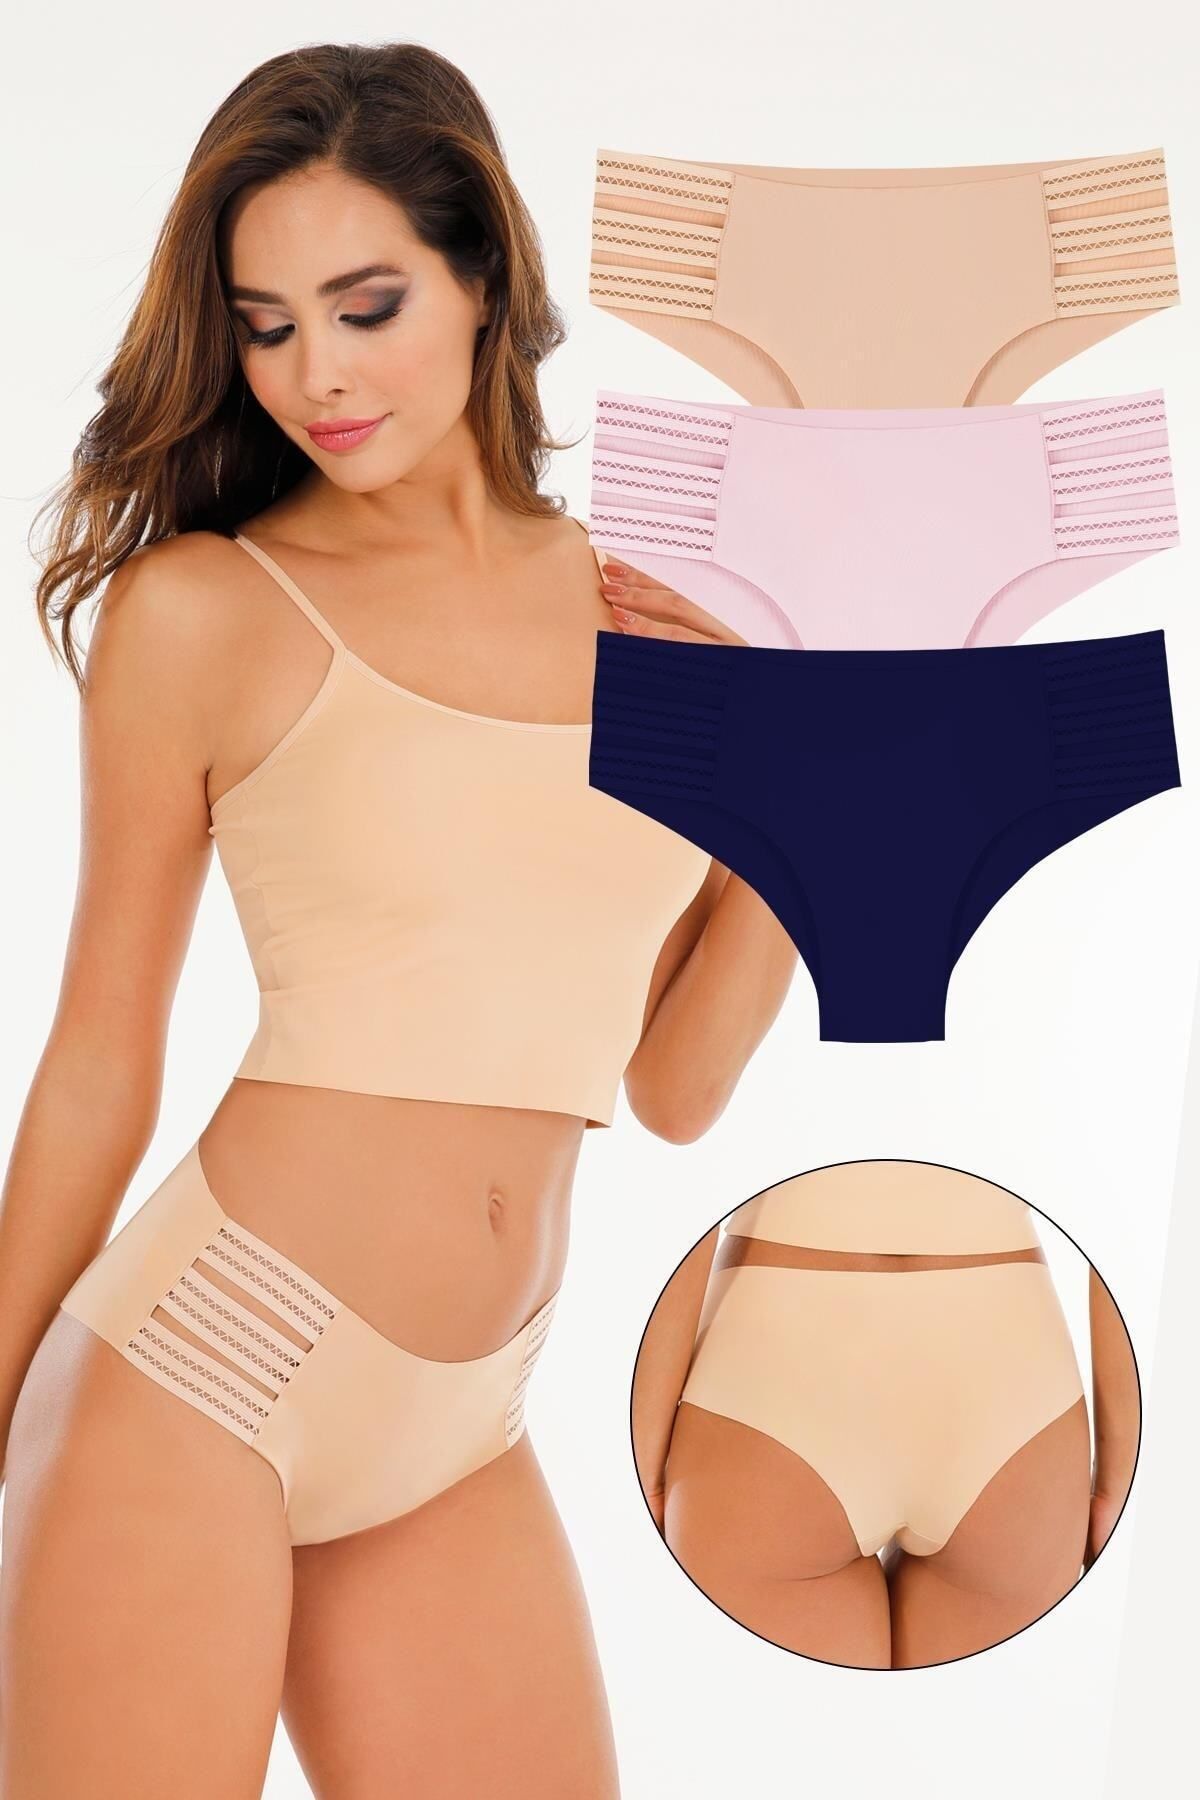 Sensu Women's Laser Cut Seamless Bato Panties 3 Pack Set - Kts3104